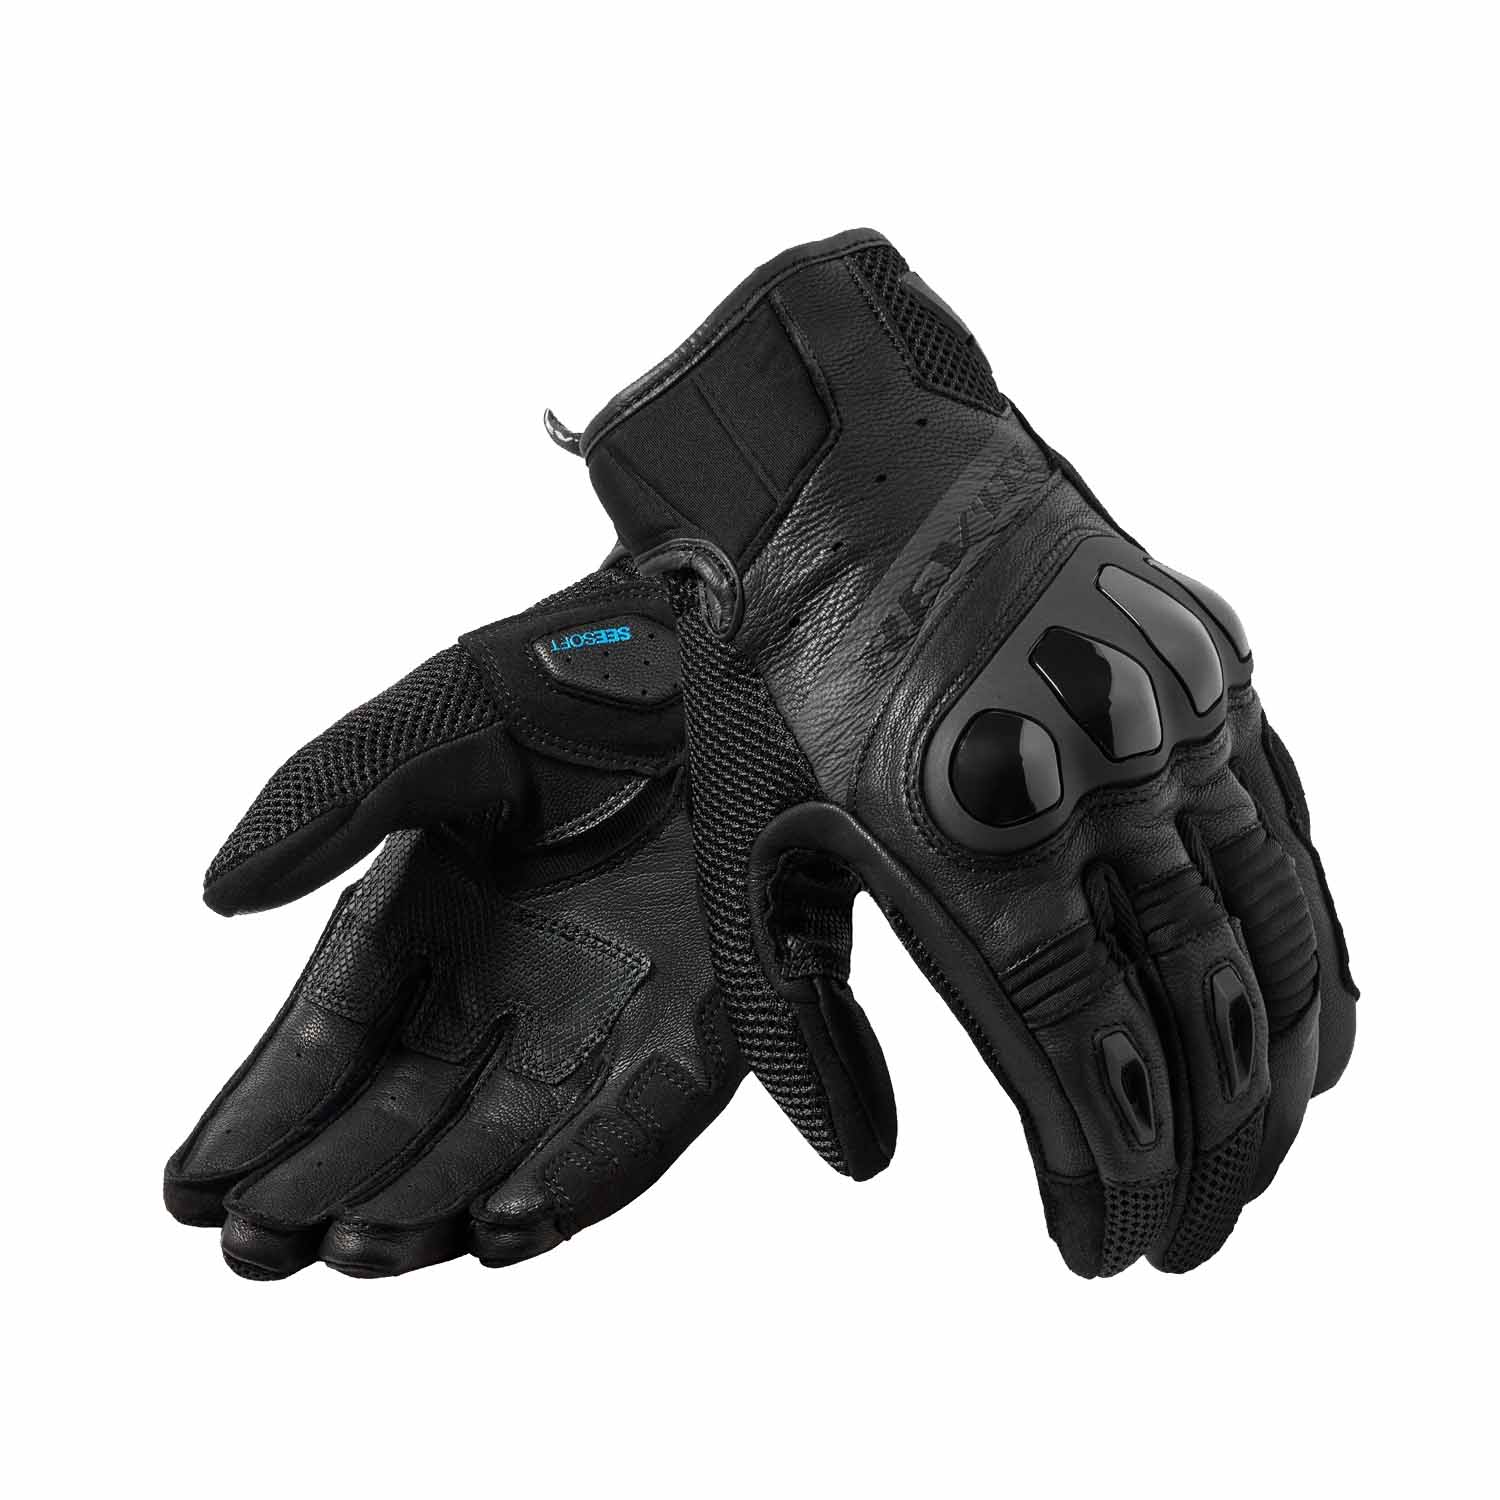 Image of REV'IT! Ritmo Gloves Black Size S ID 8700001380010